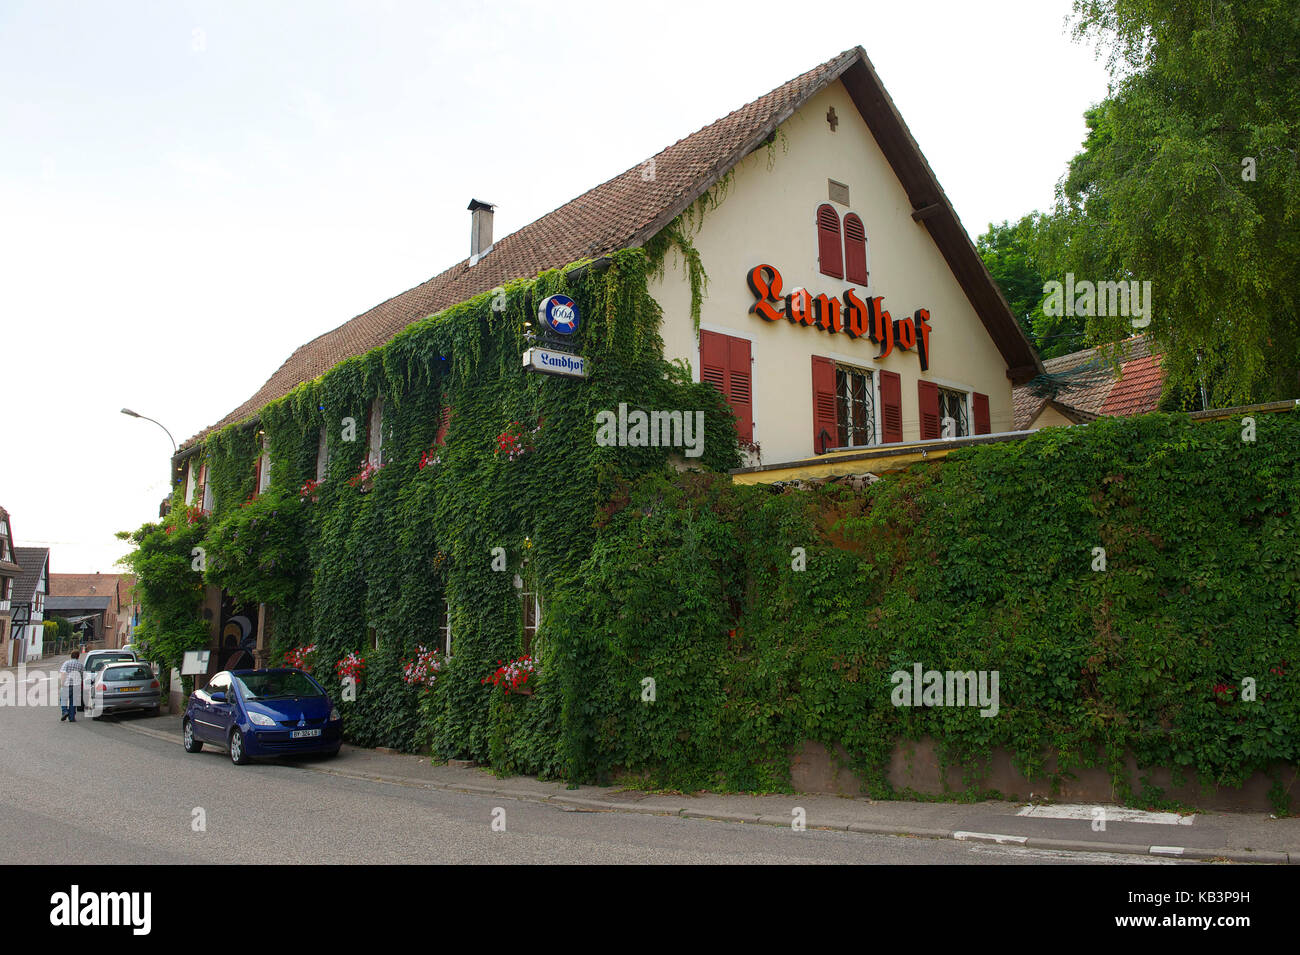 France, Bas-Rhin, Olwisheim, restaurant Landhof Stock Photo